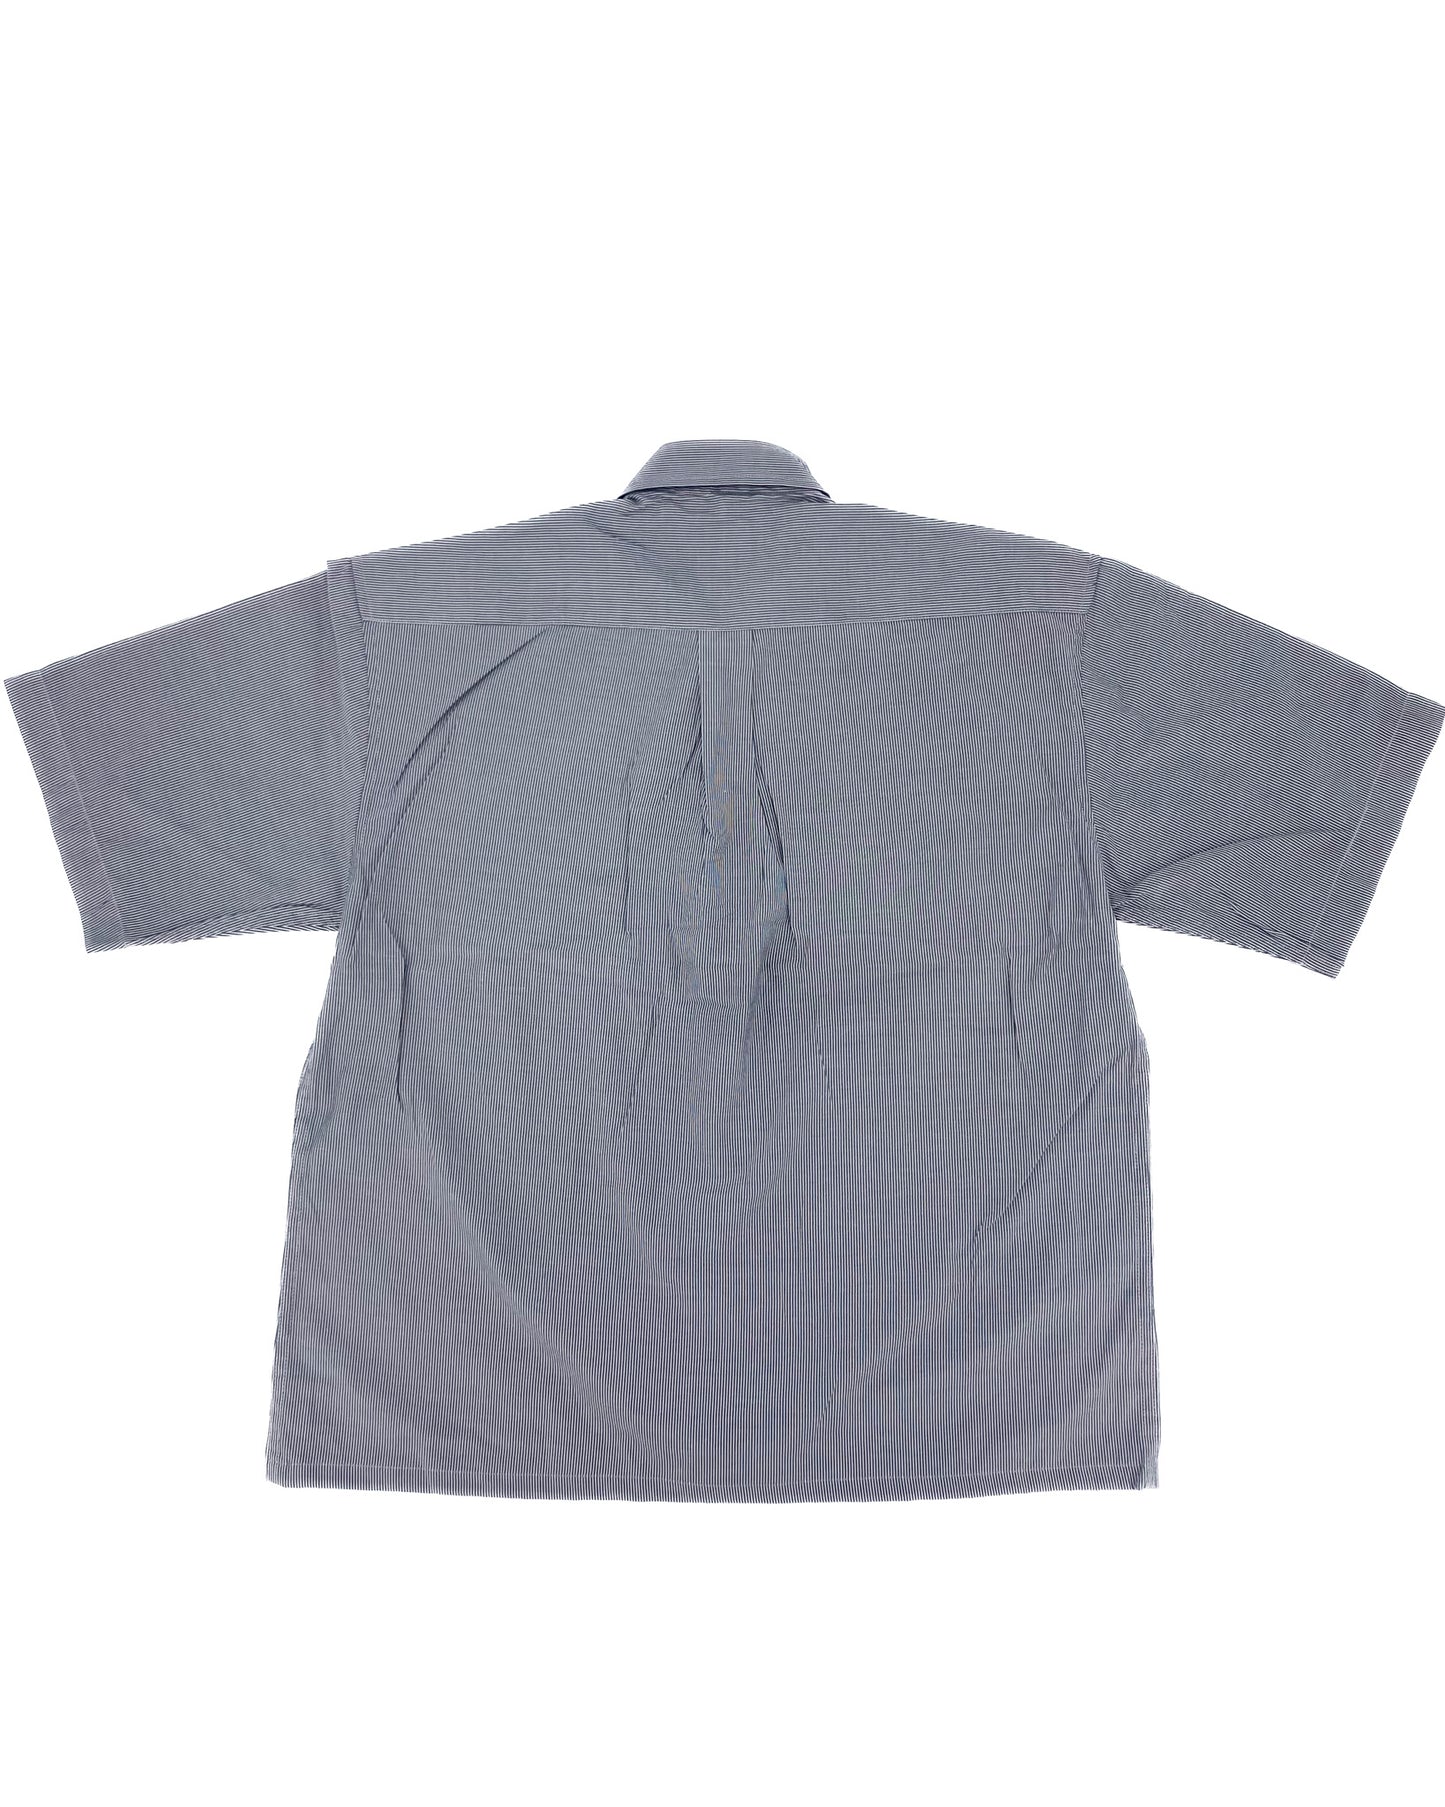 Vintage Blue/Grey Striped Shirt - M